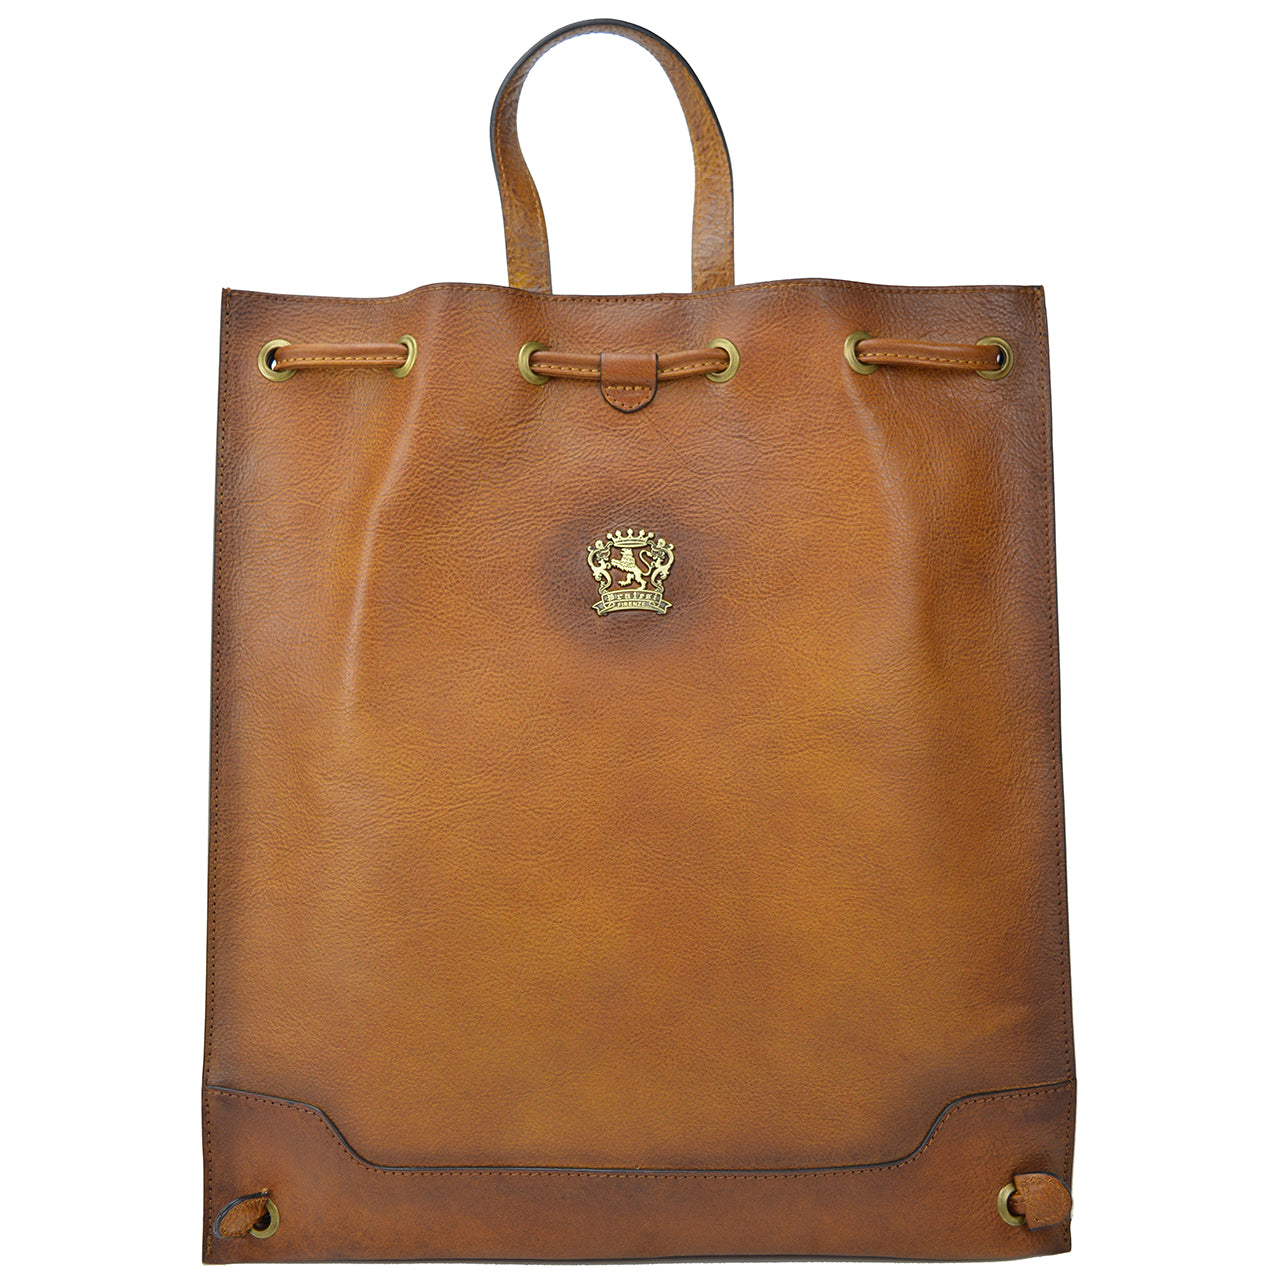 Pratesi Contea B490 Backpack in genuine Italian leather